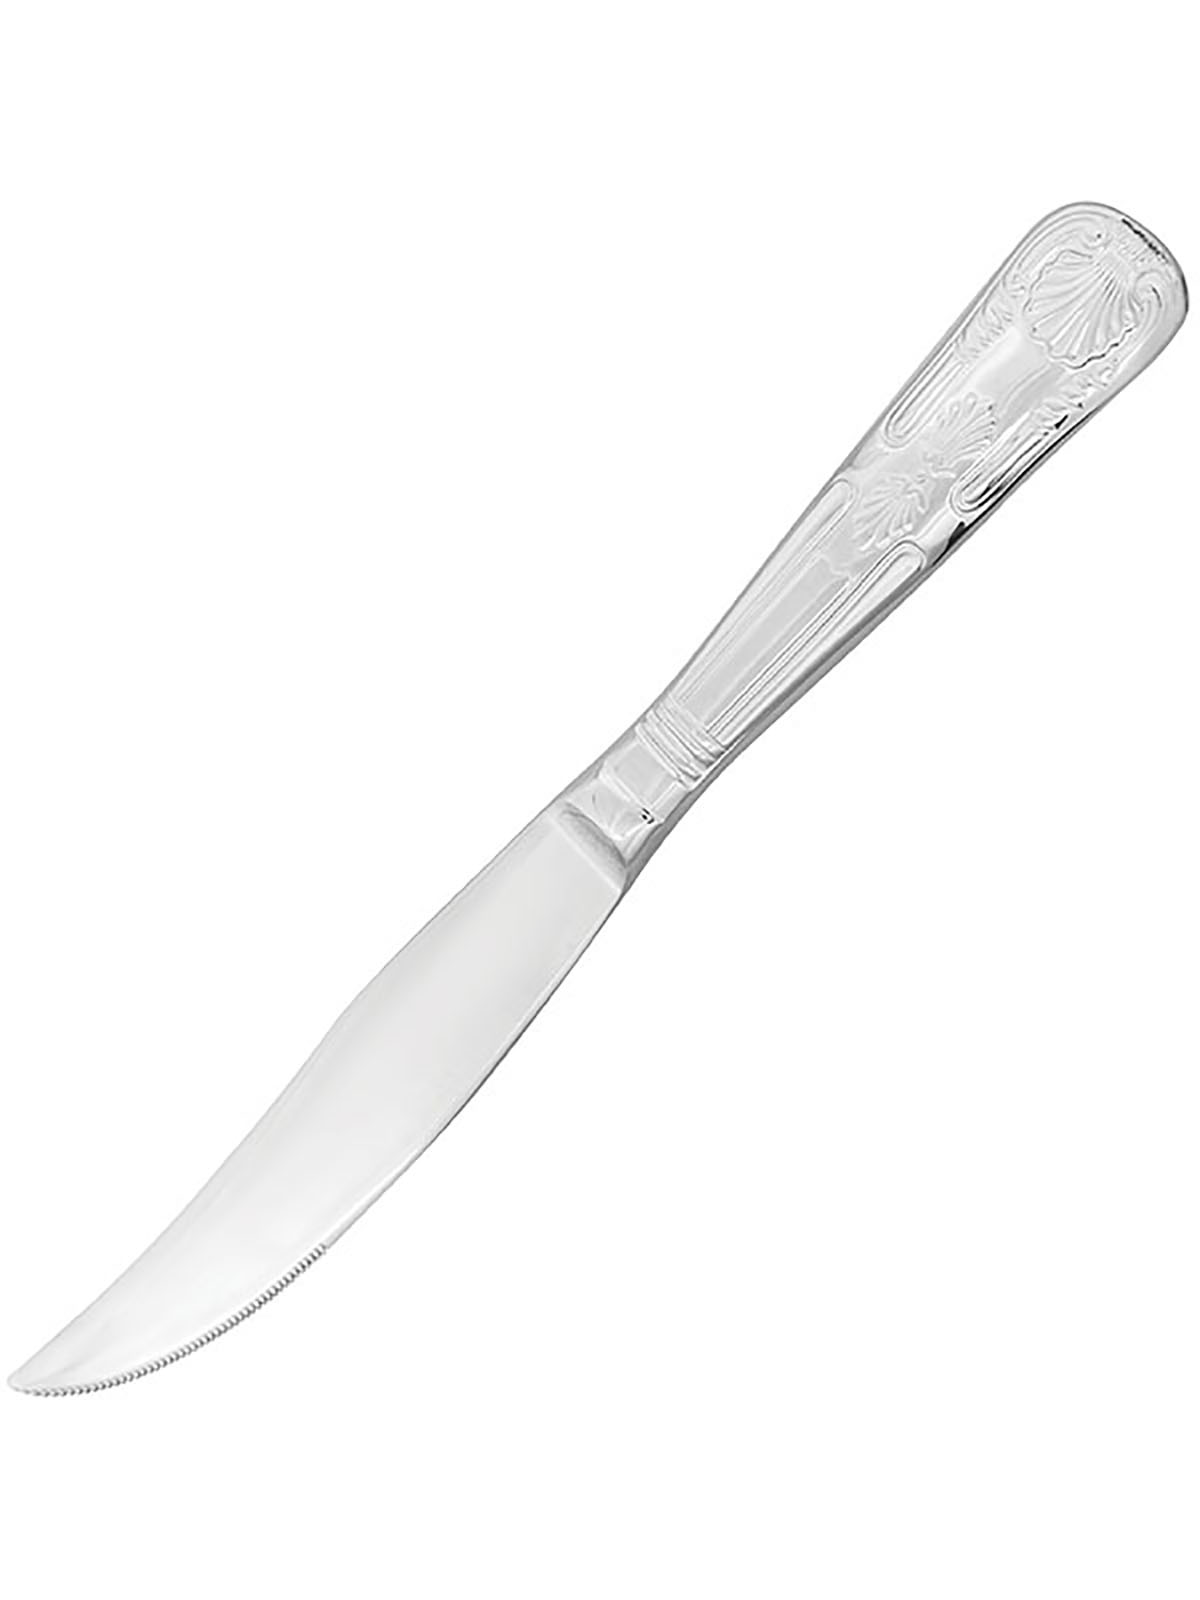 Нож для стейка Arthur Price Kings Stainless Steel из нержавеющей стали